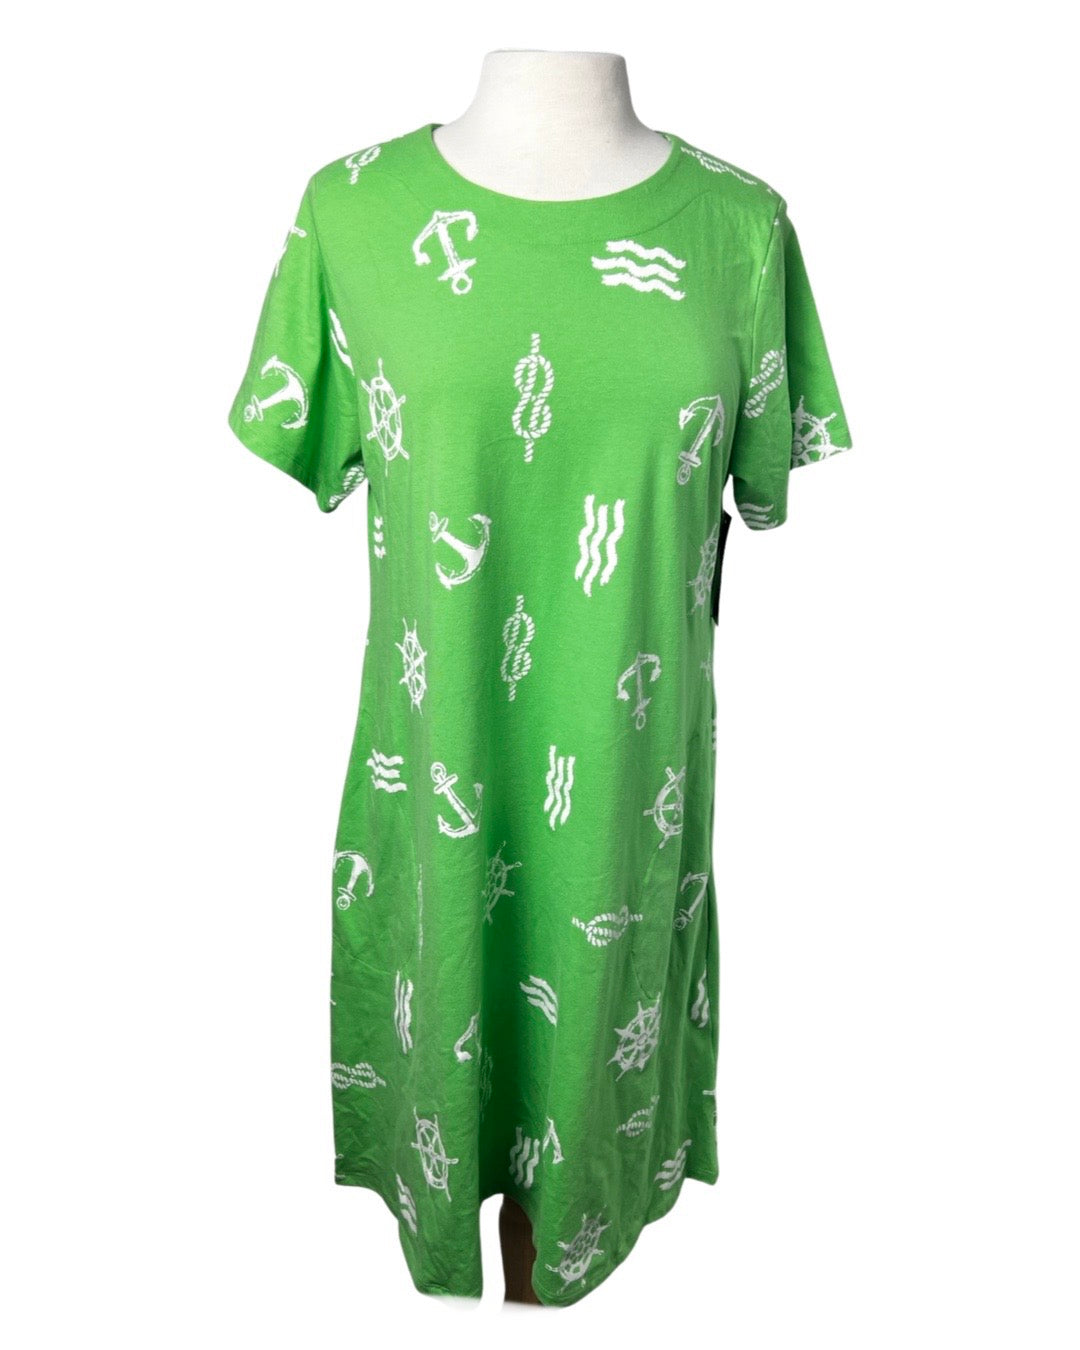 Green Nautical Day Dress